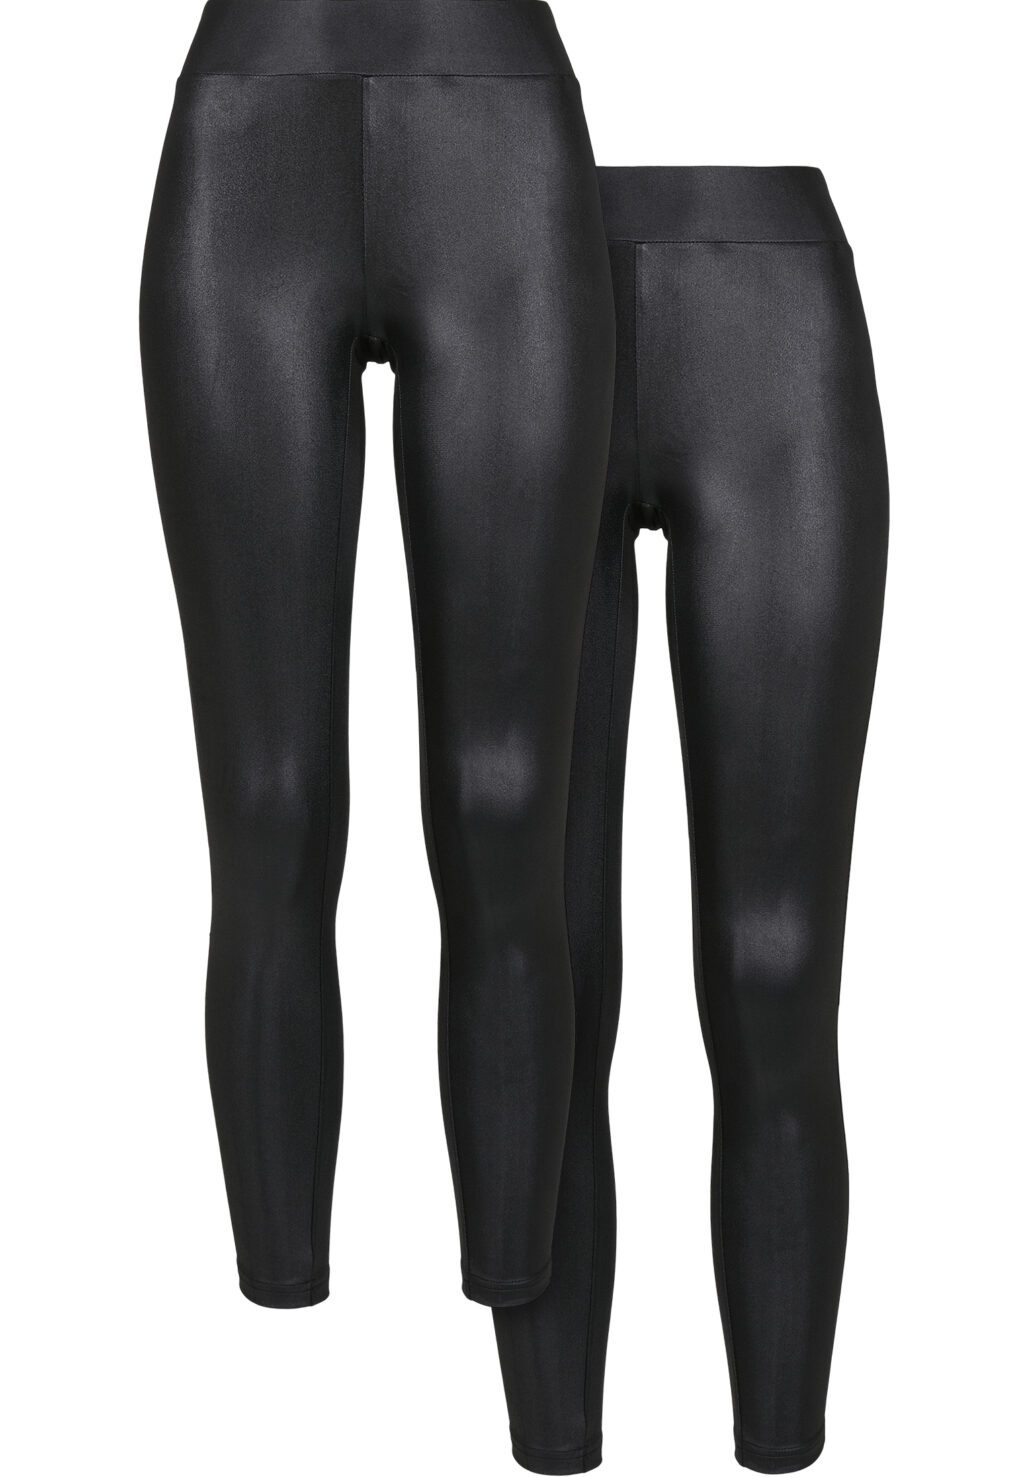 Urban Classics Ladies Synthetic Leather Leggings 2-Pack black+black TB3715A